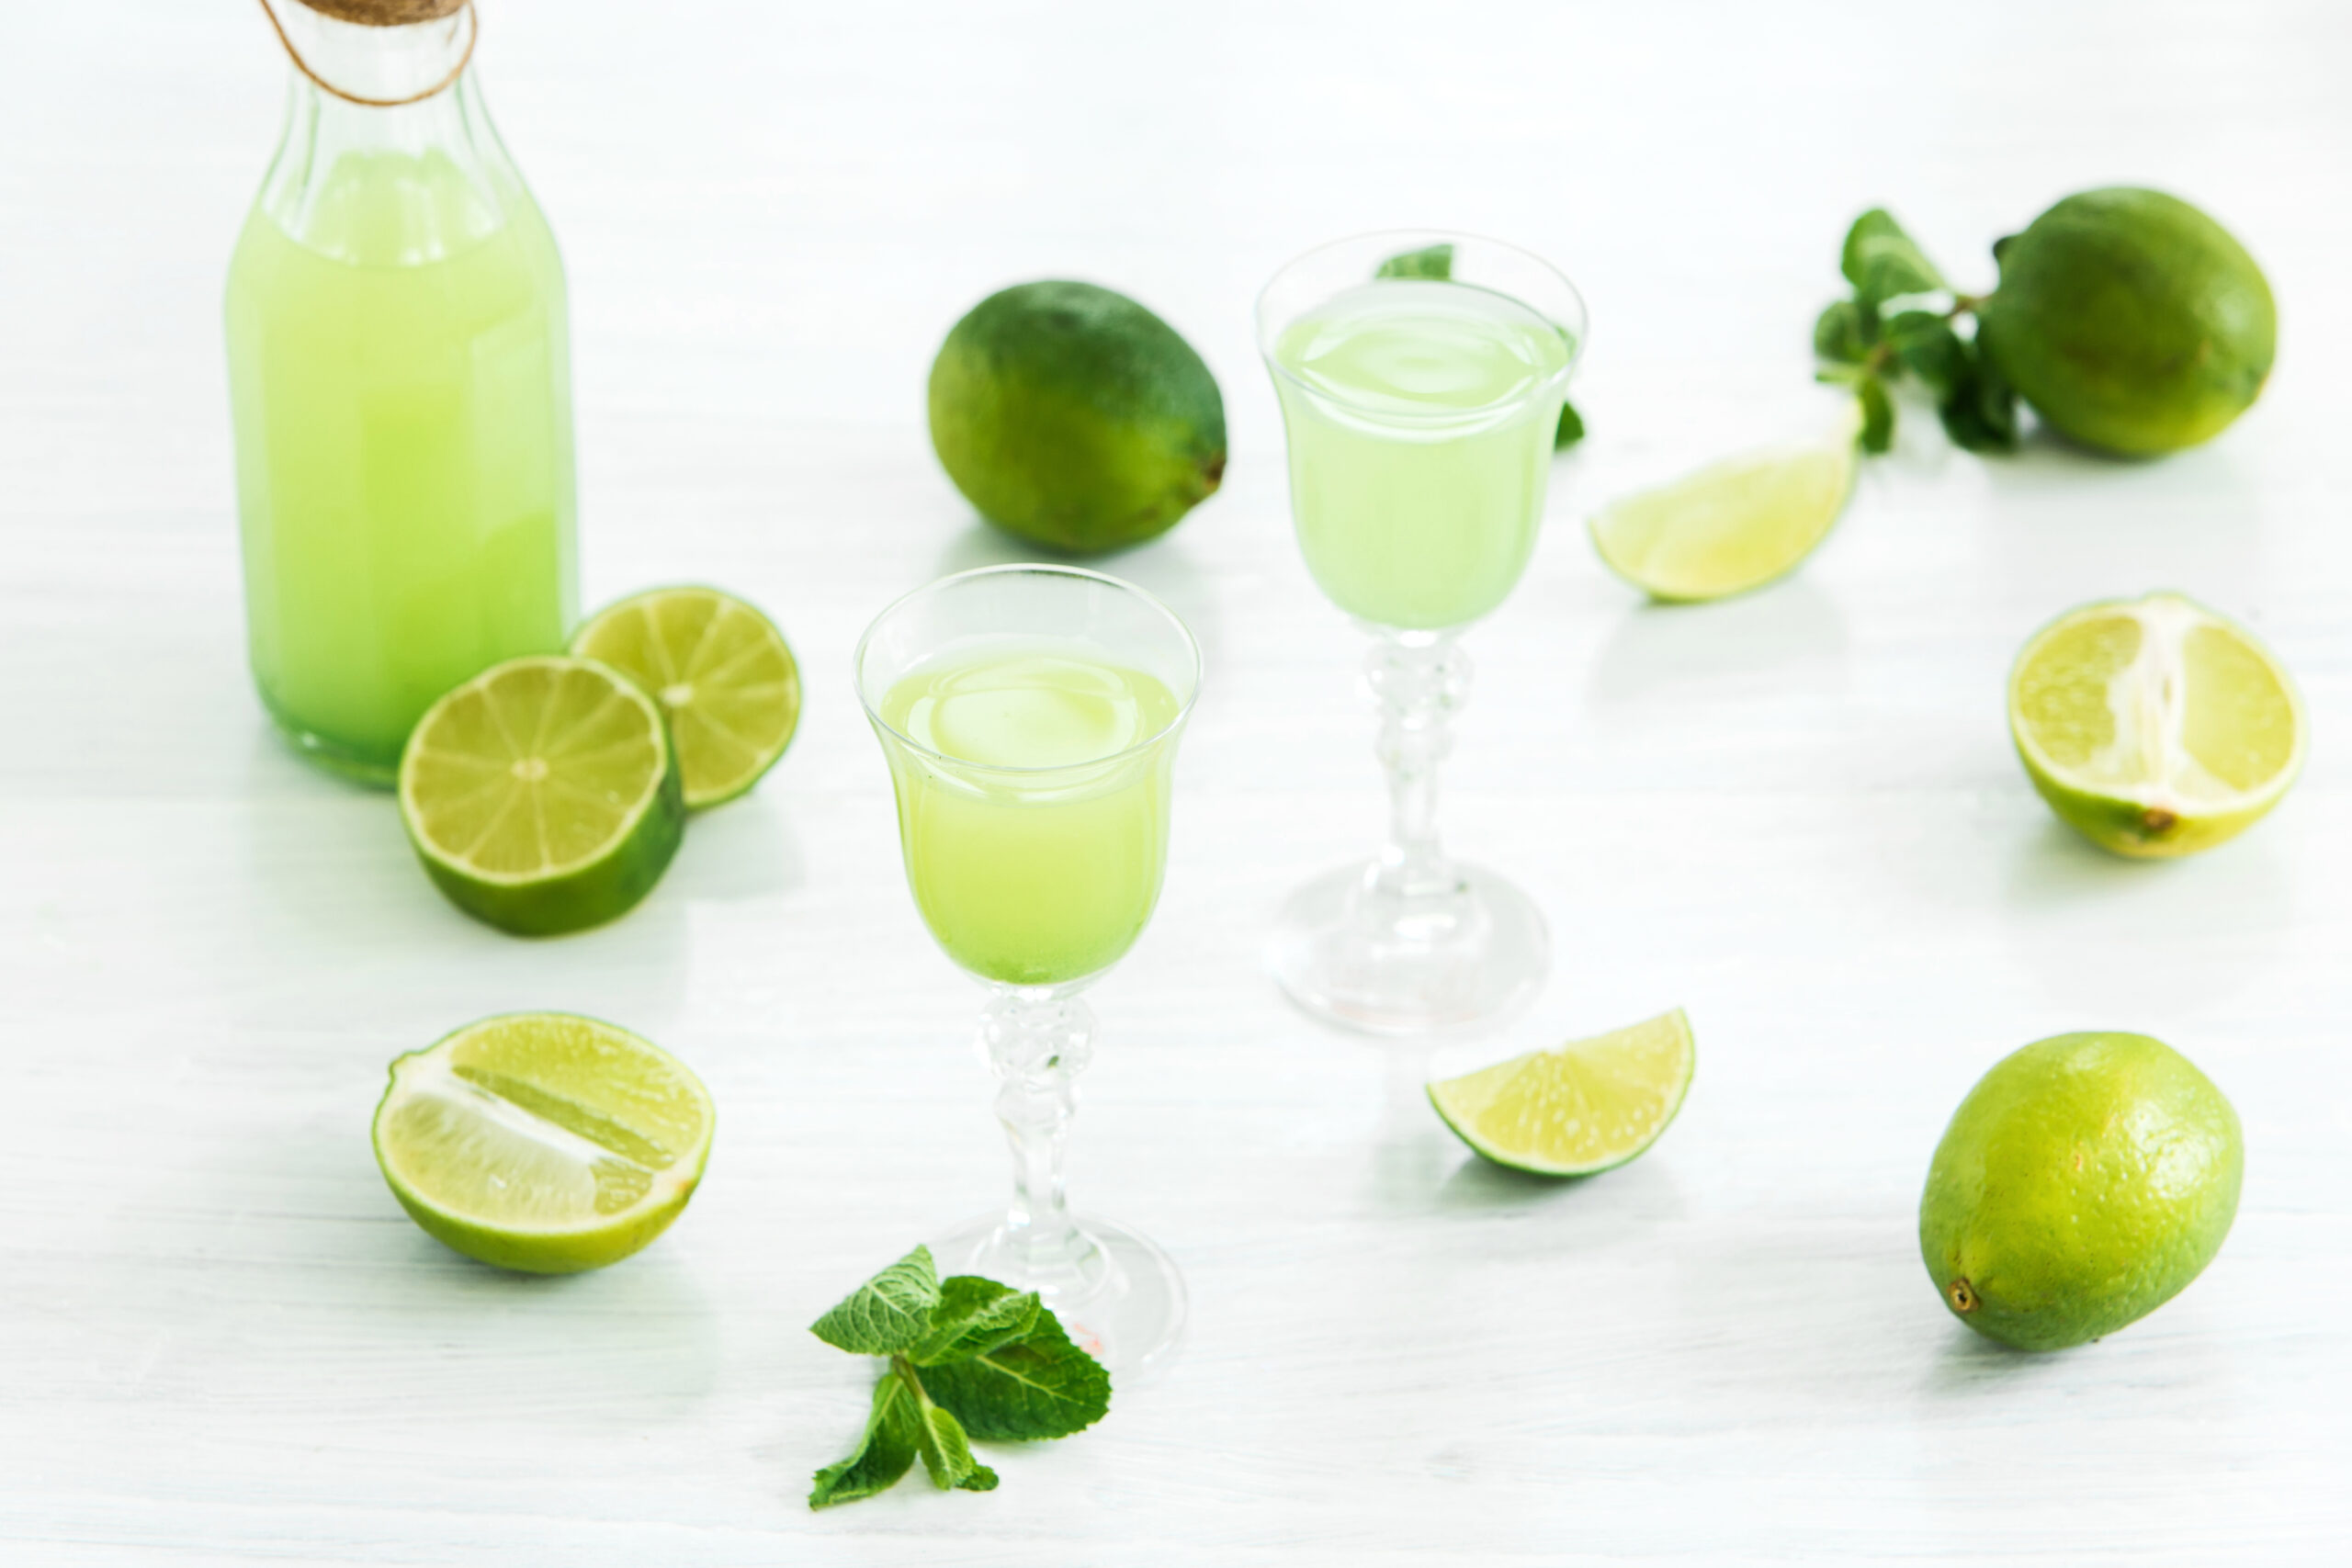 home-lime-liquor-glass-fresh-lemons-limes-white-scaled Veja os 8 abdominais para perder barriga Perder Barriga  